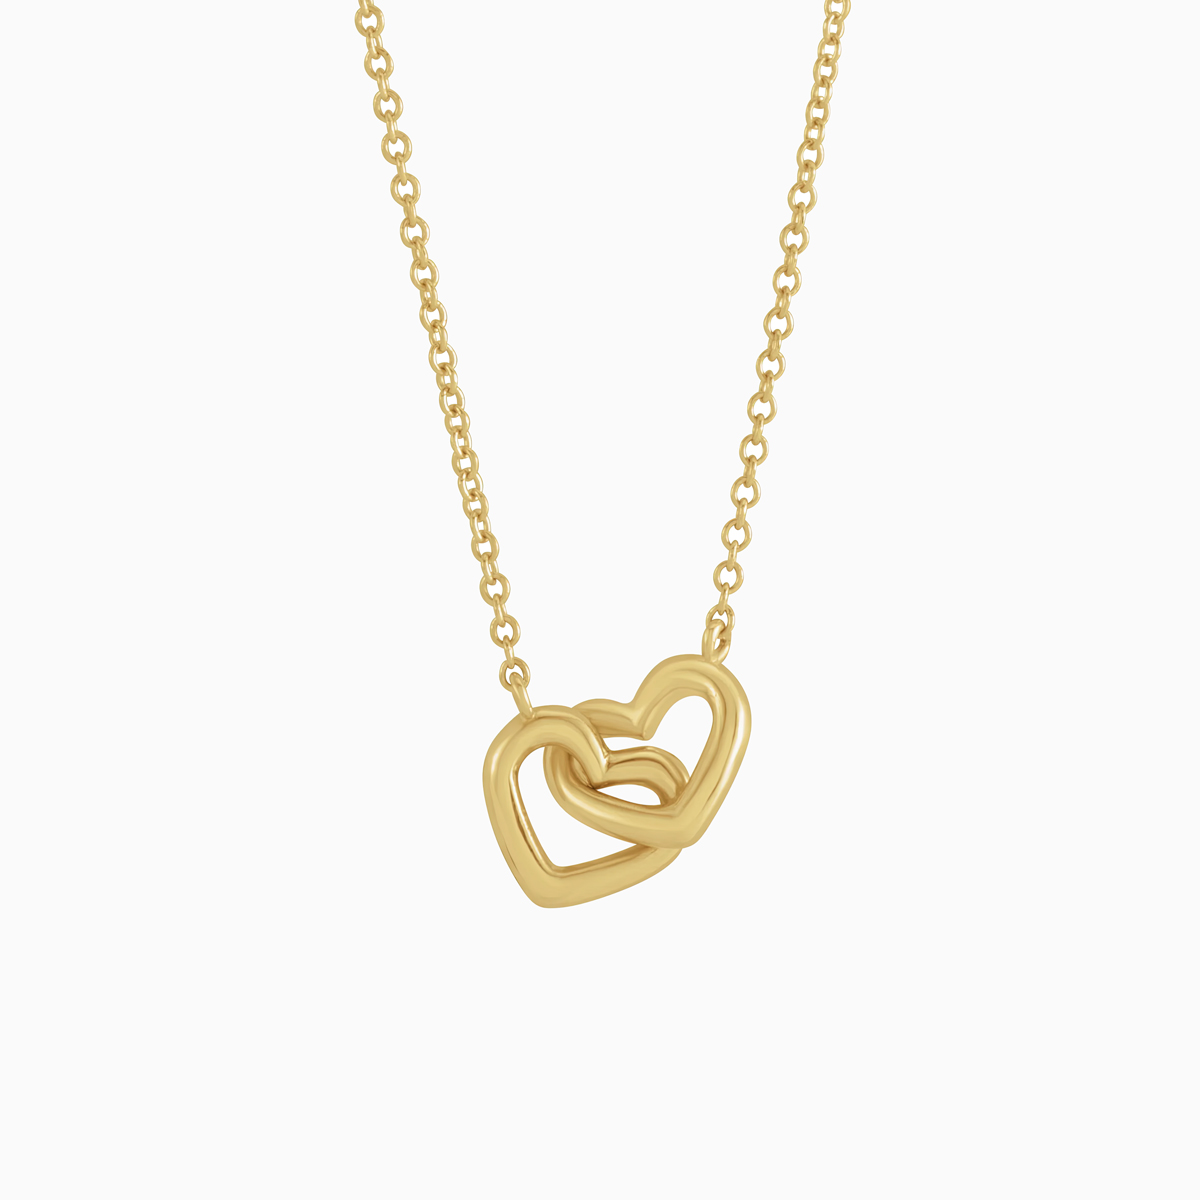 Interlocking Heart Necklace, 14k Yellow Gold